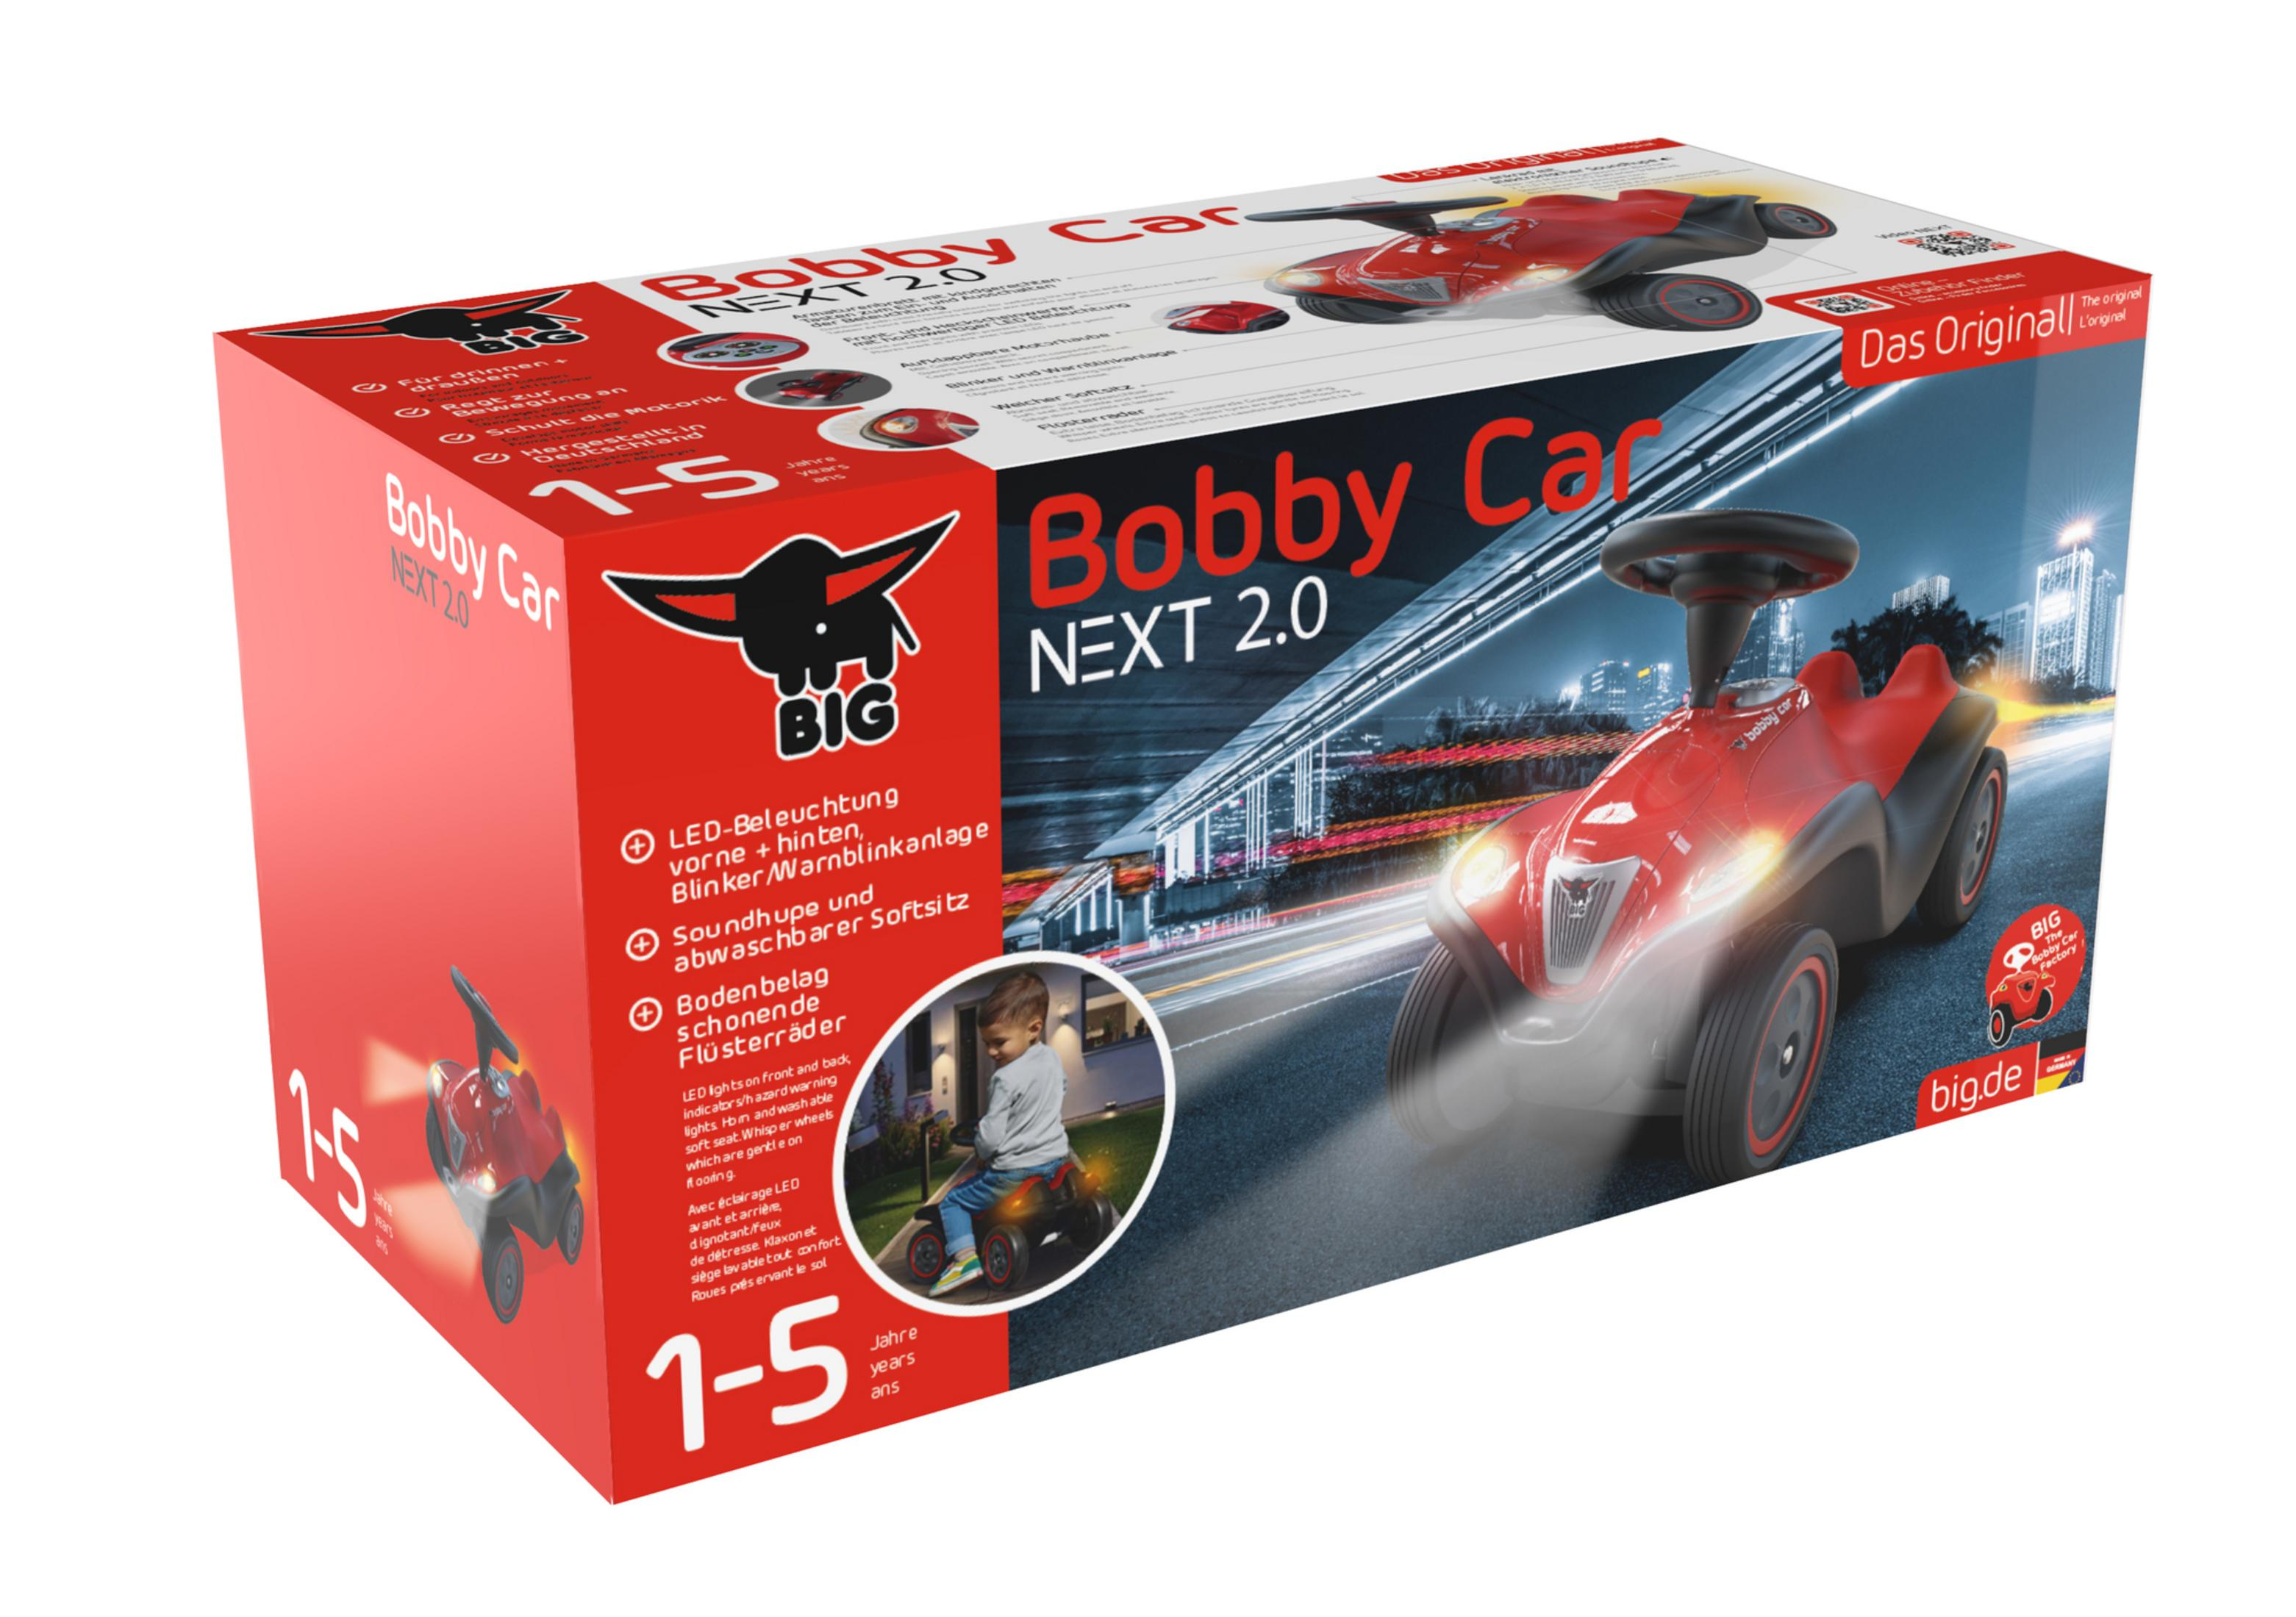 2.0 BIG BOBBY BIG ROT 800056238 NEXT Rot Rutschfahrzeug CAR